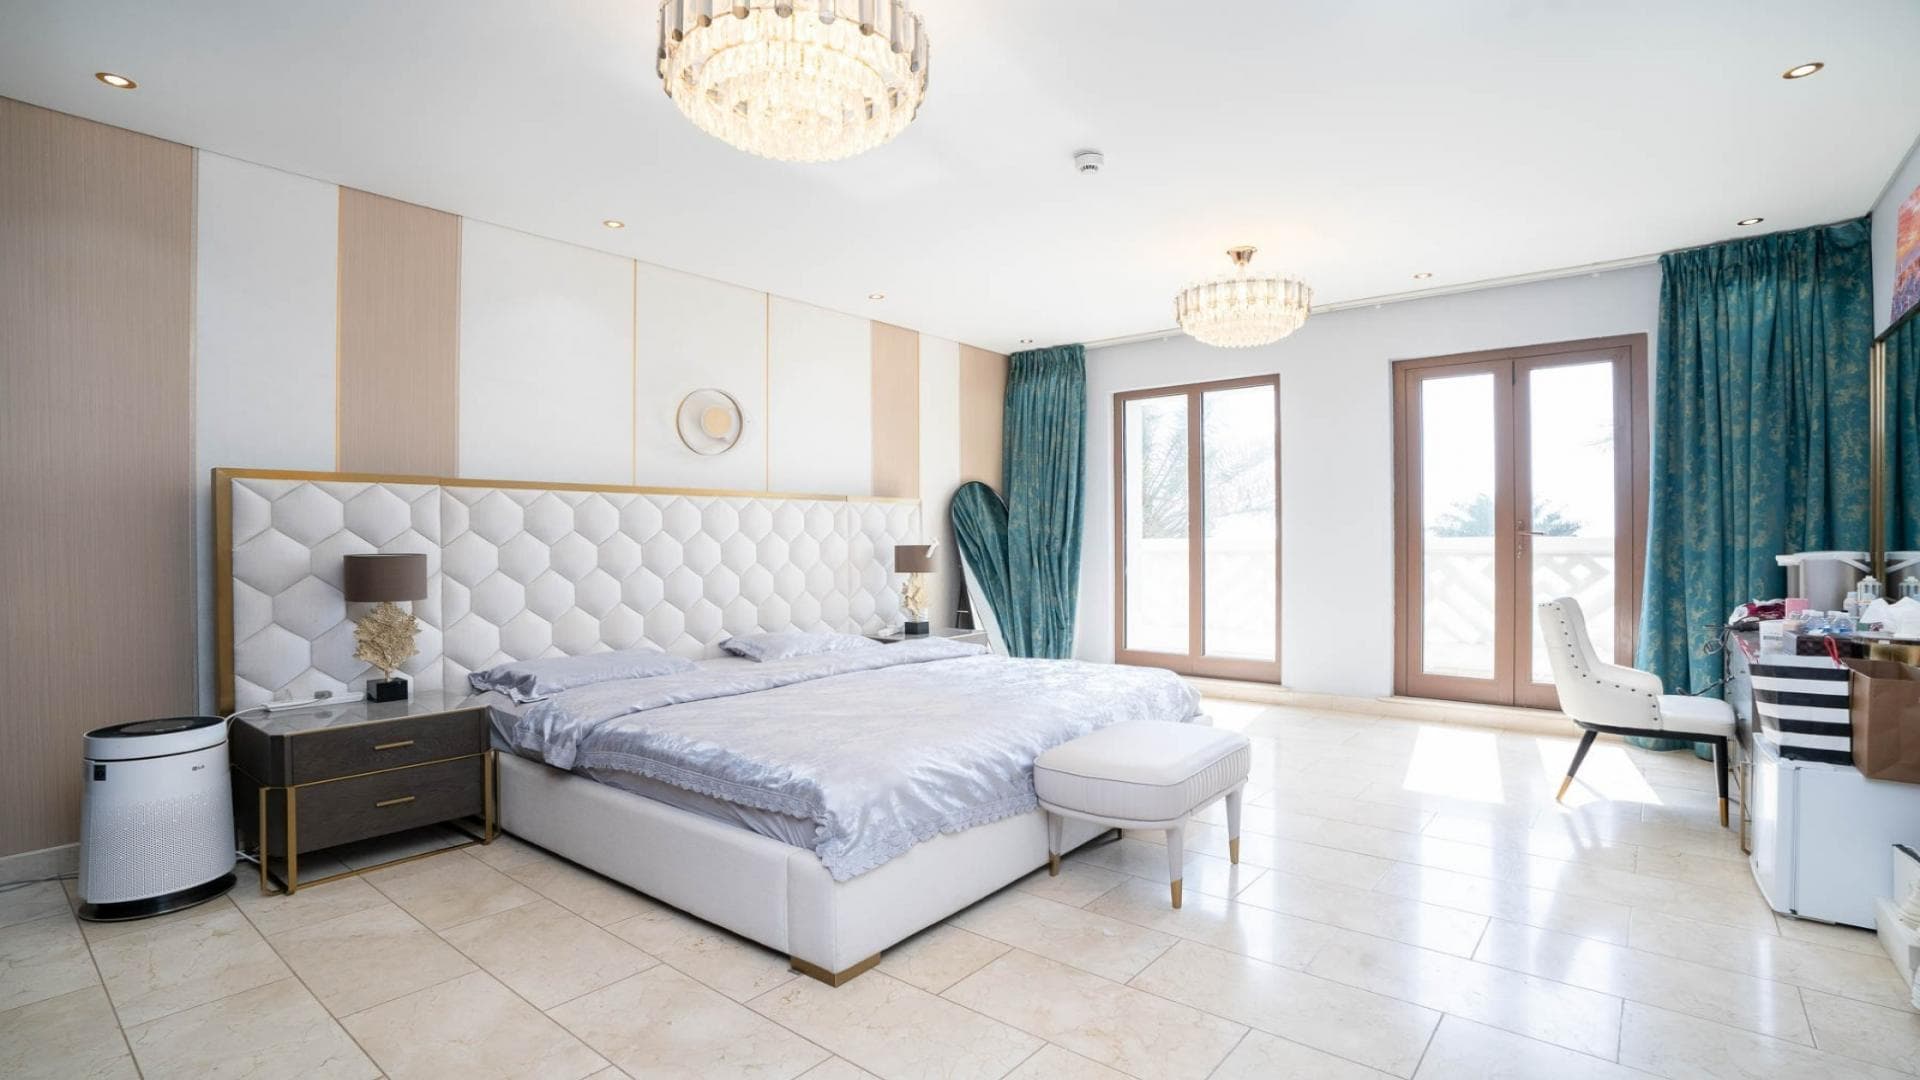 5 Bedroom Villa For Rent Grand Residence Lp37486 E07a601959a9600.jpeg